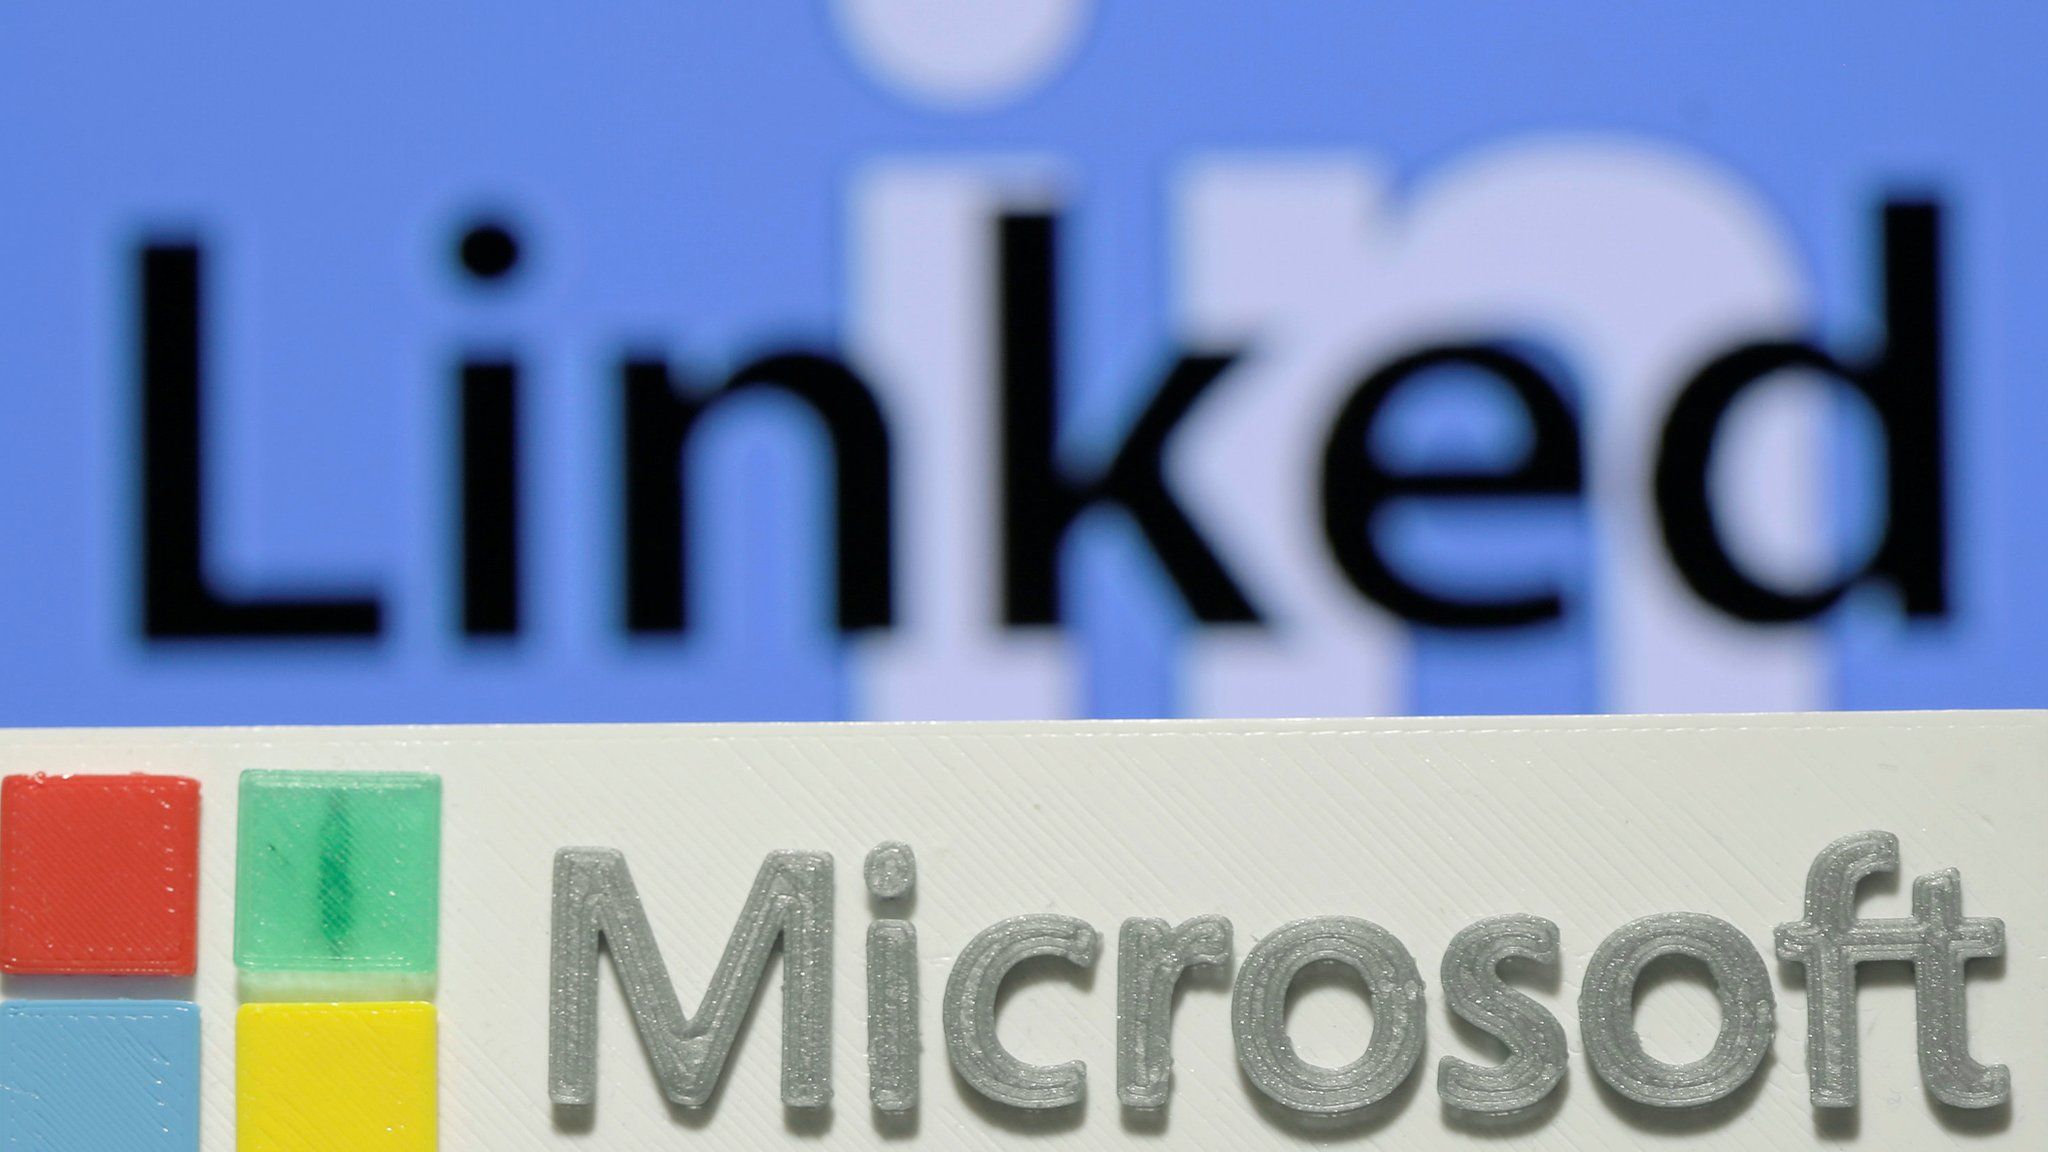 LinkedIn and Microsoft logos